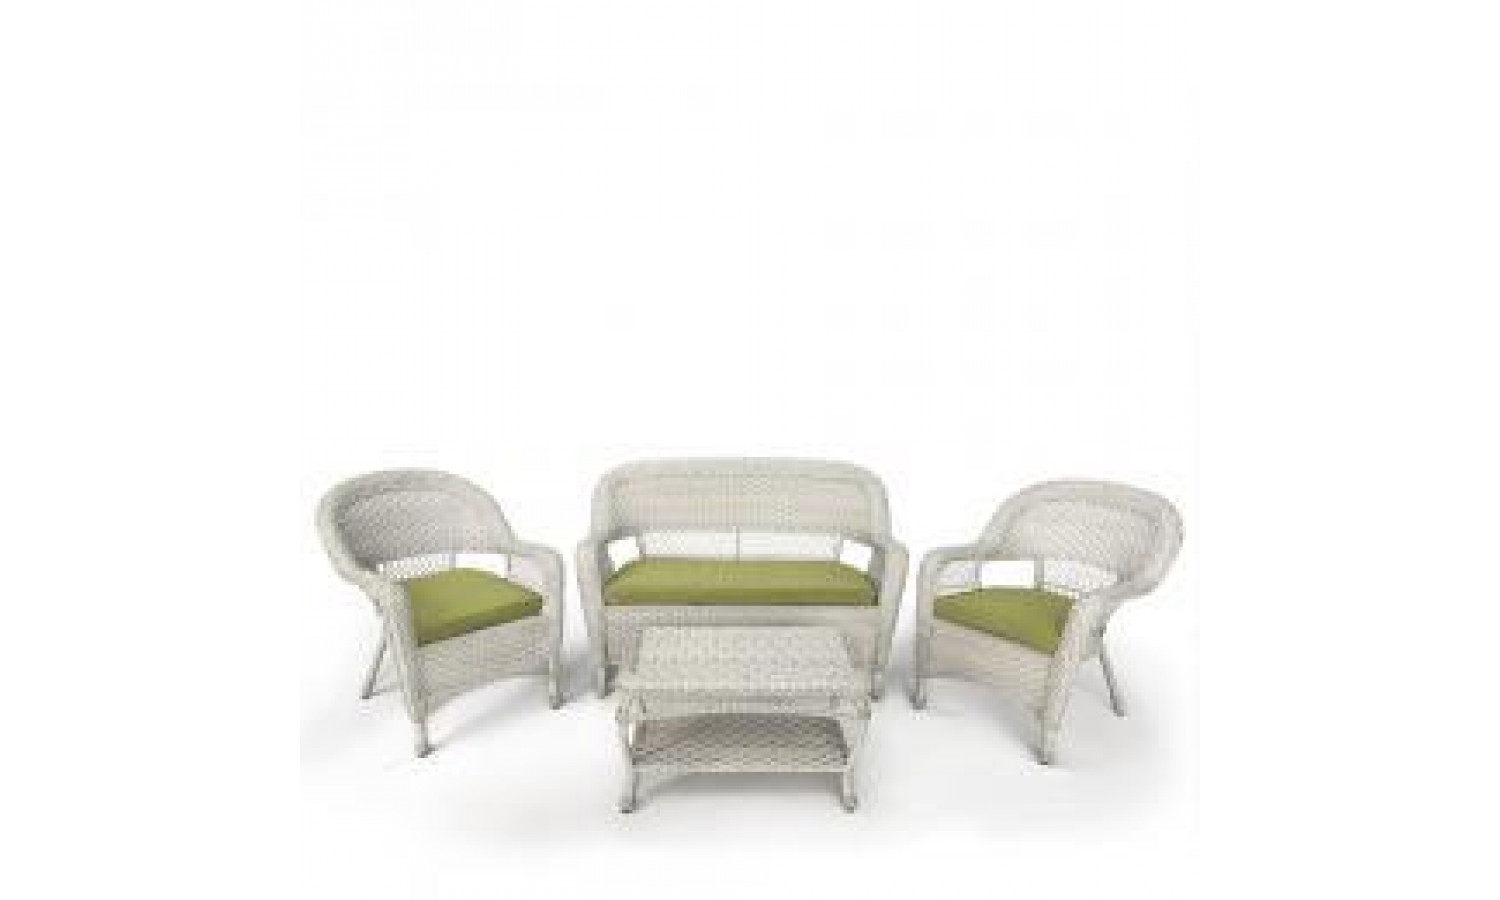 Комплект плетеной мебели LV130 White/Green